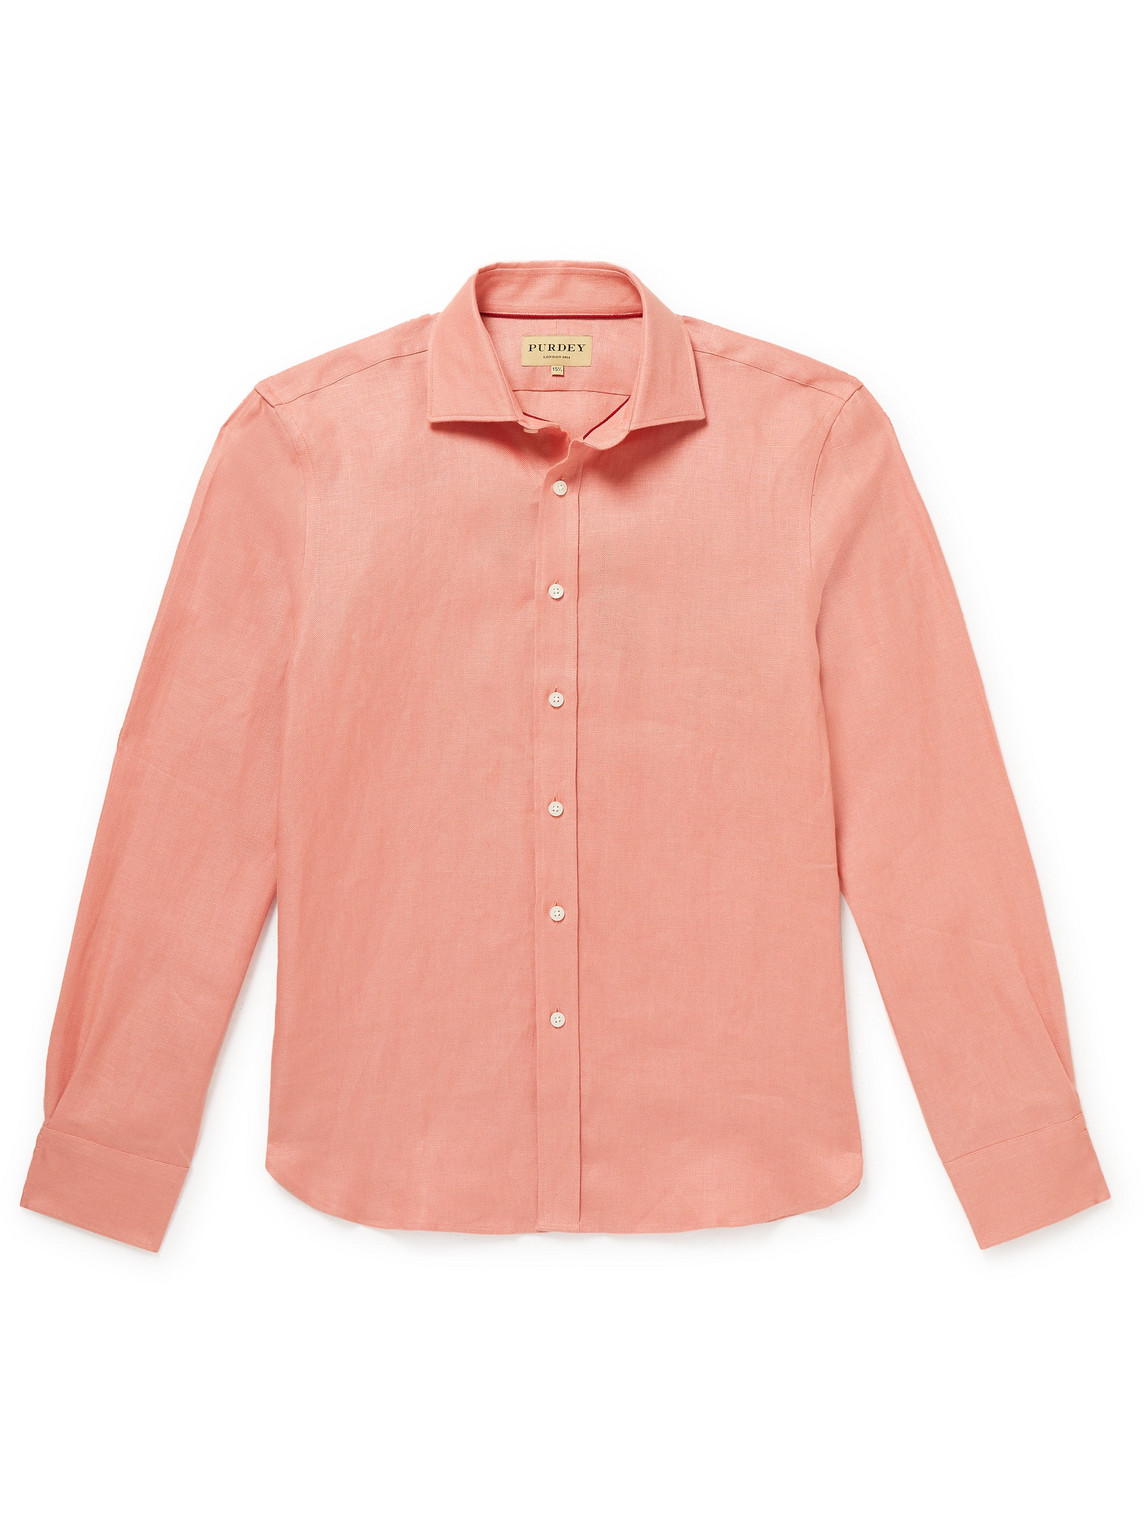 Purdey Classic Linen Shirt In Pink